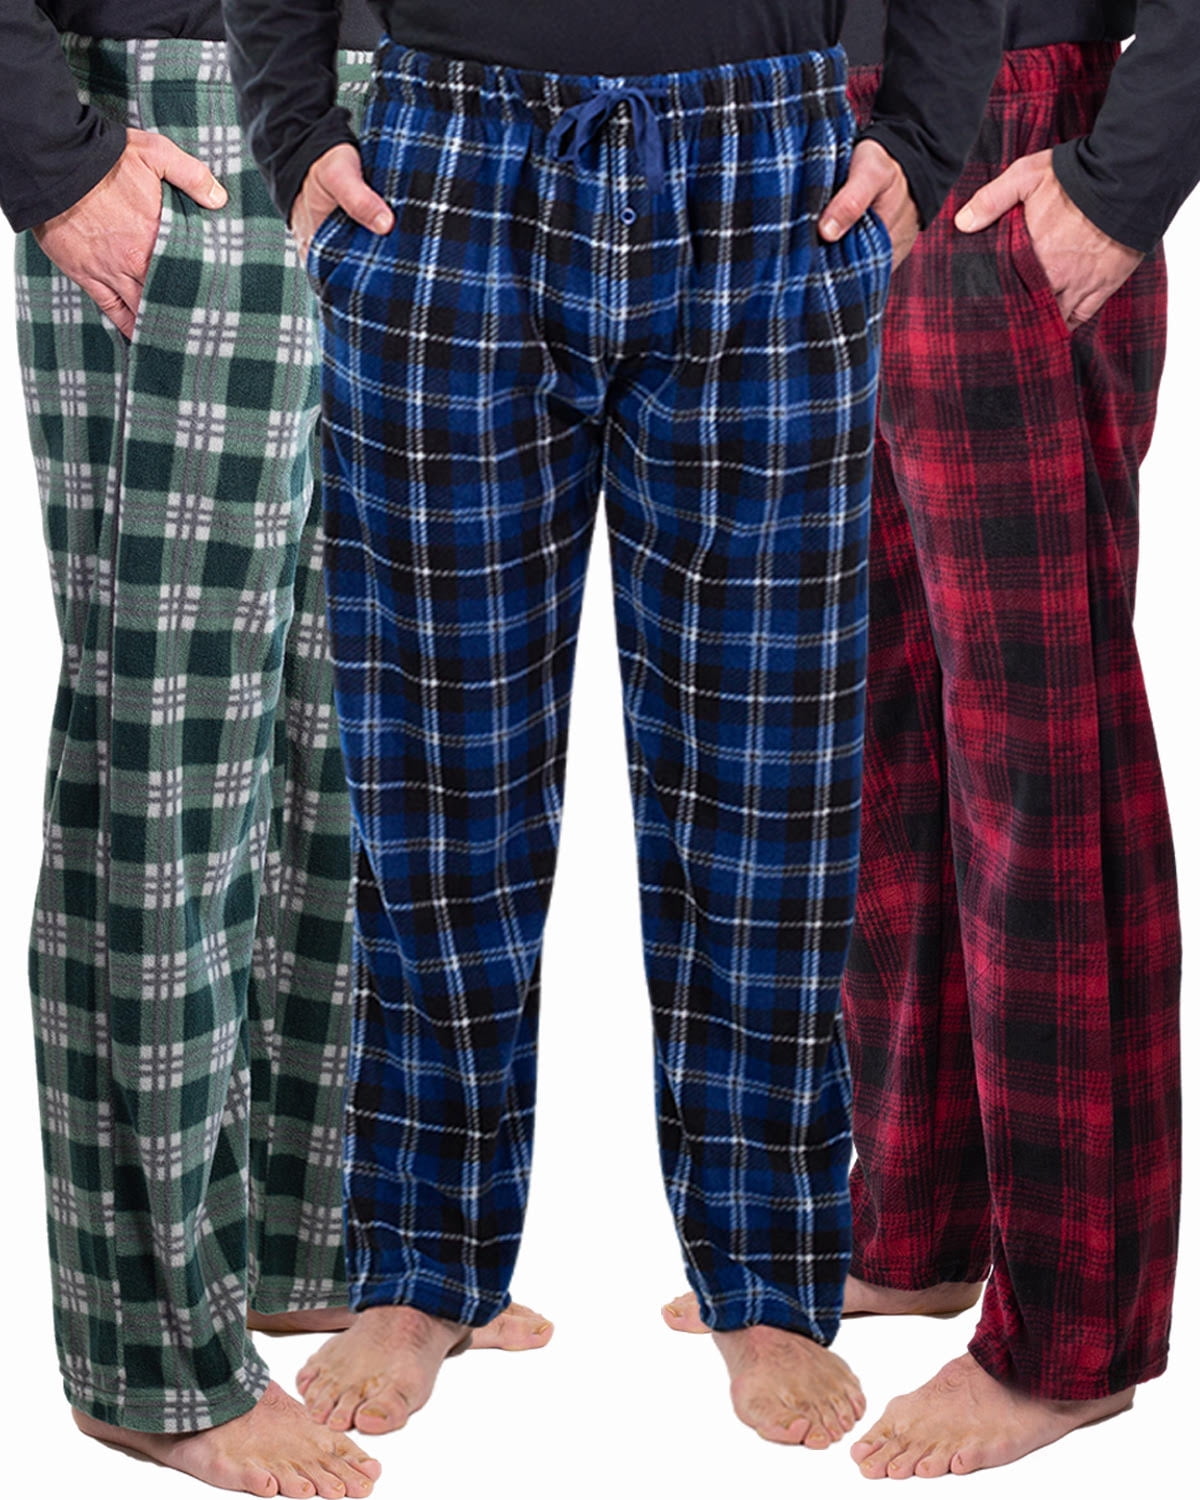 NEW Mens Lounge Pants Size 2XL Pajamas Sleepwear Pockets PJs Soft Fleece Plaid B 